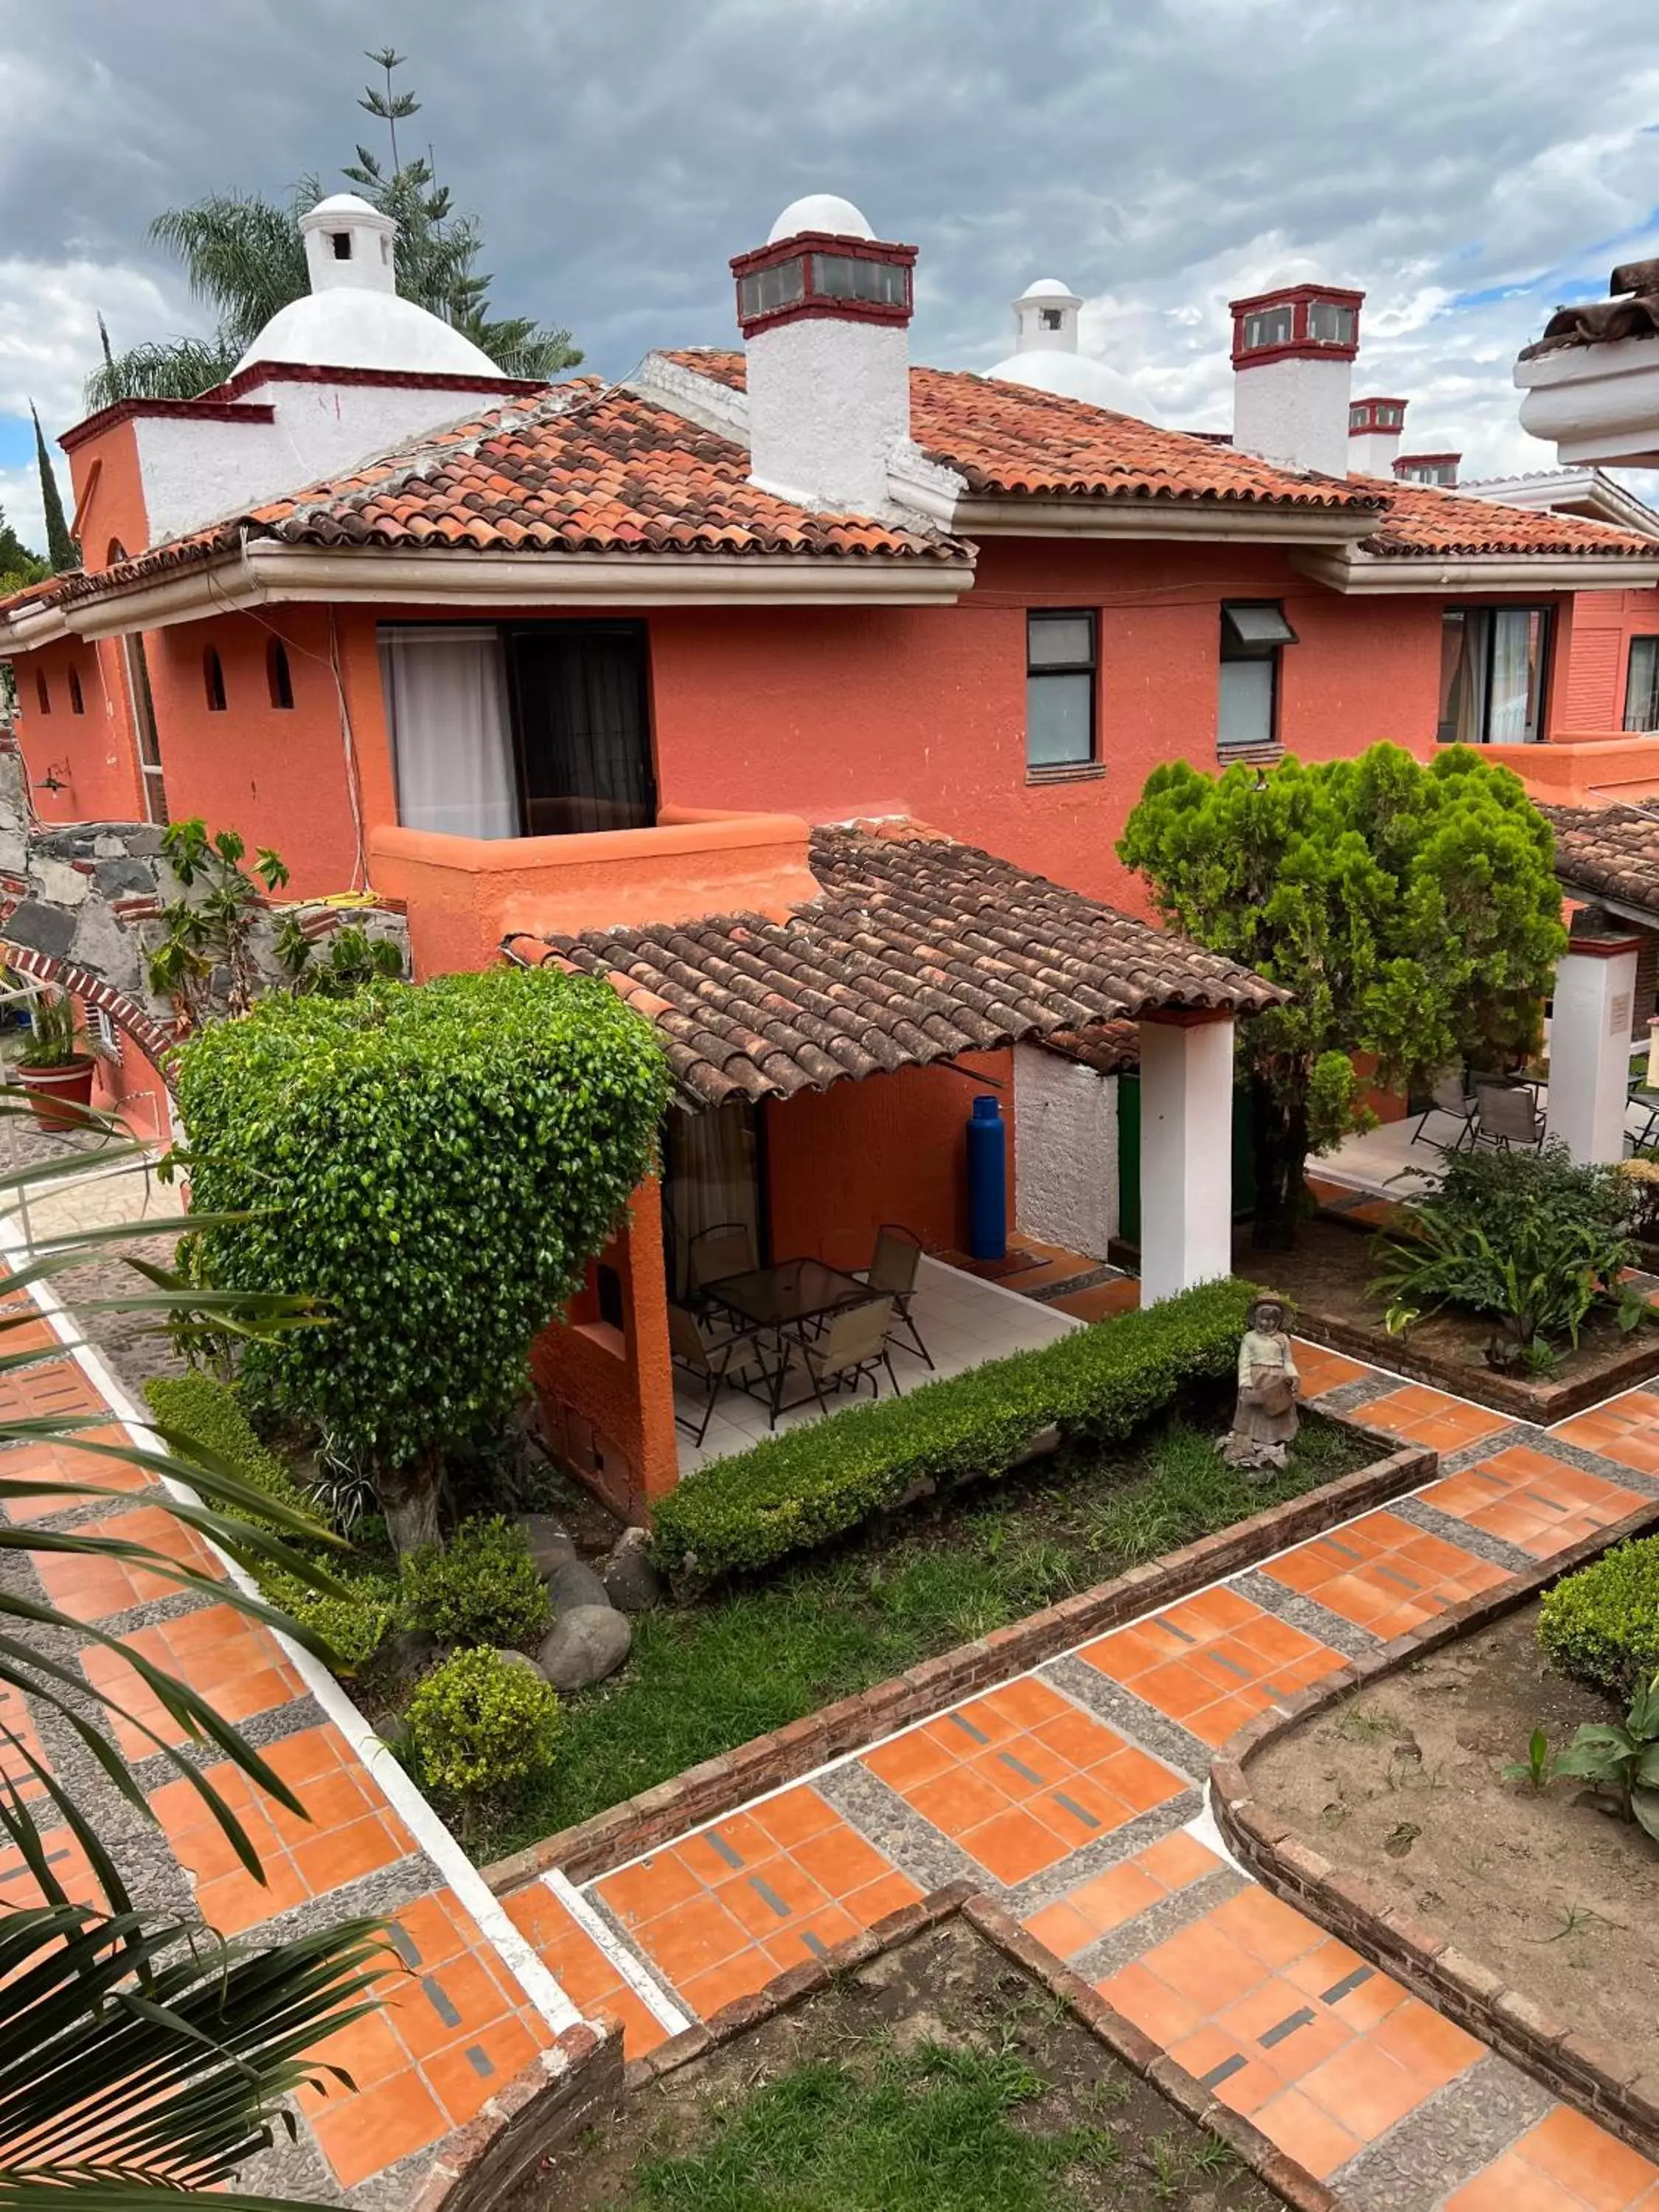 Garden view in Hotel Villas Ajijic, Ajijic Chapala Jalisco